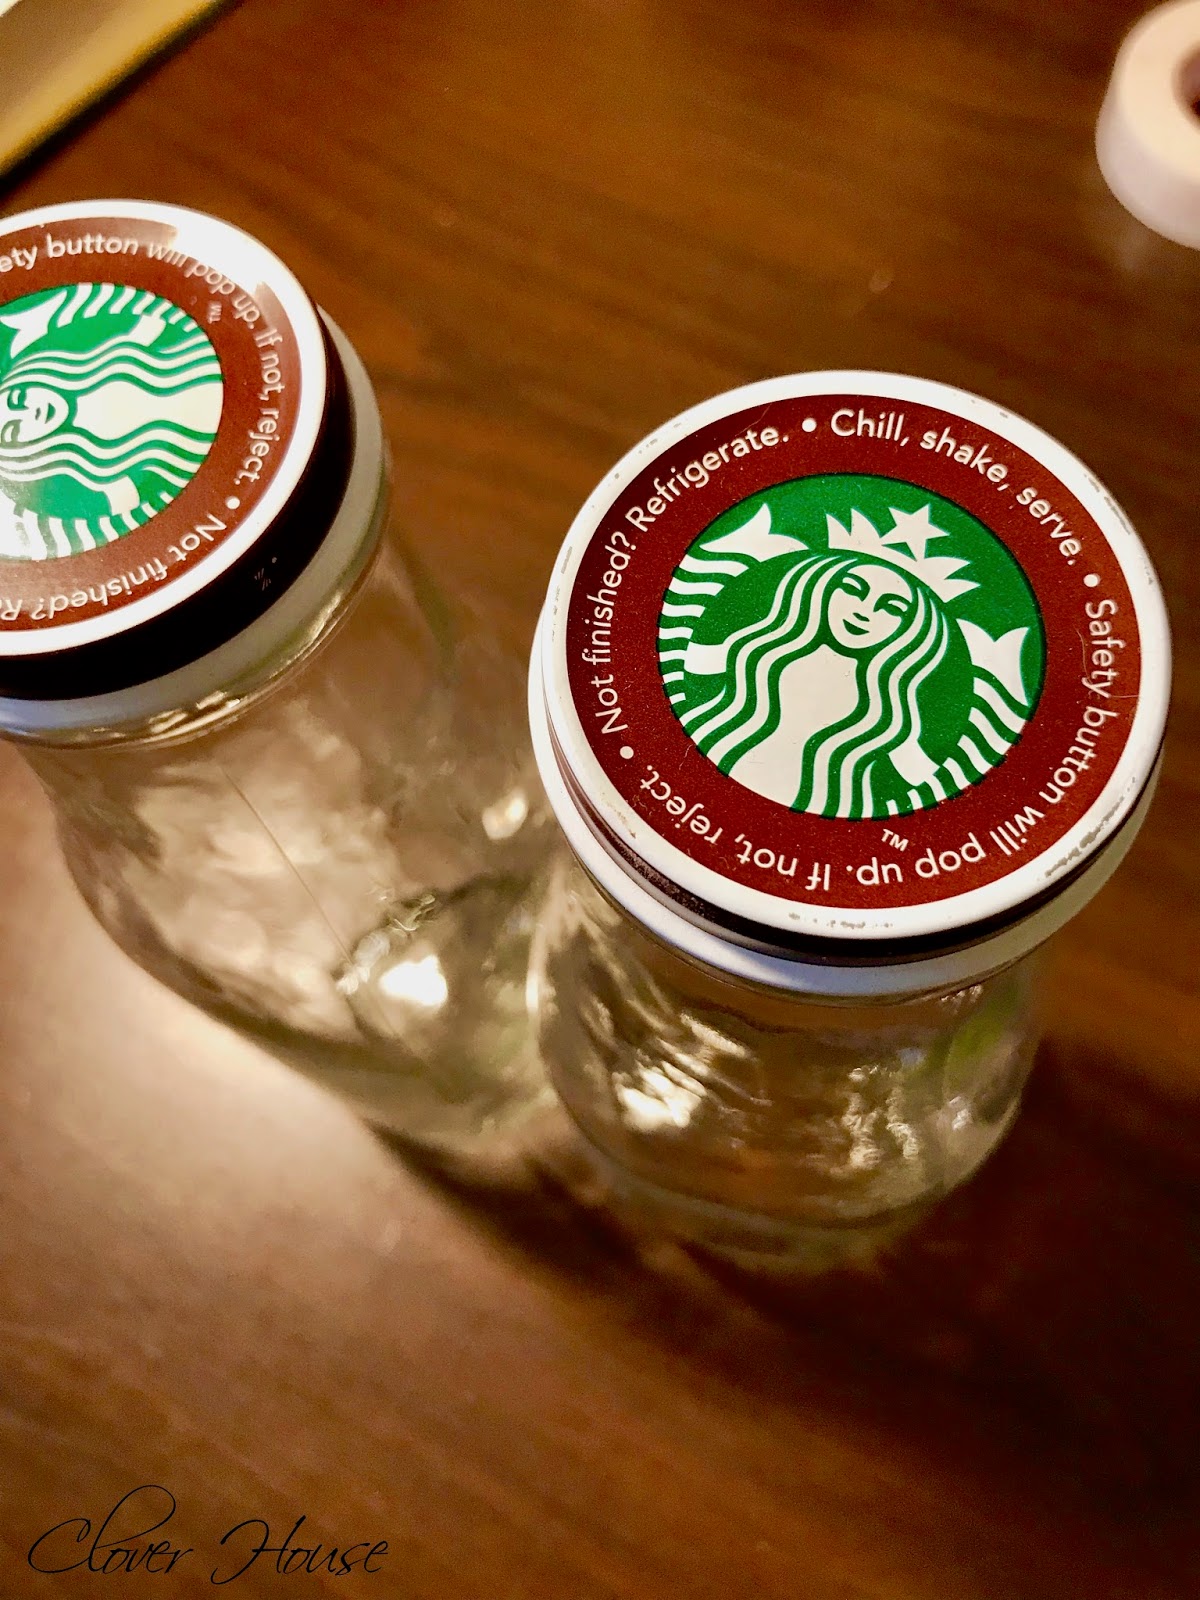 Clover House: A Valentine Treat - Upcycled Starbucks Bottle